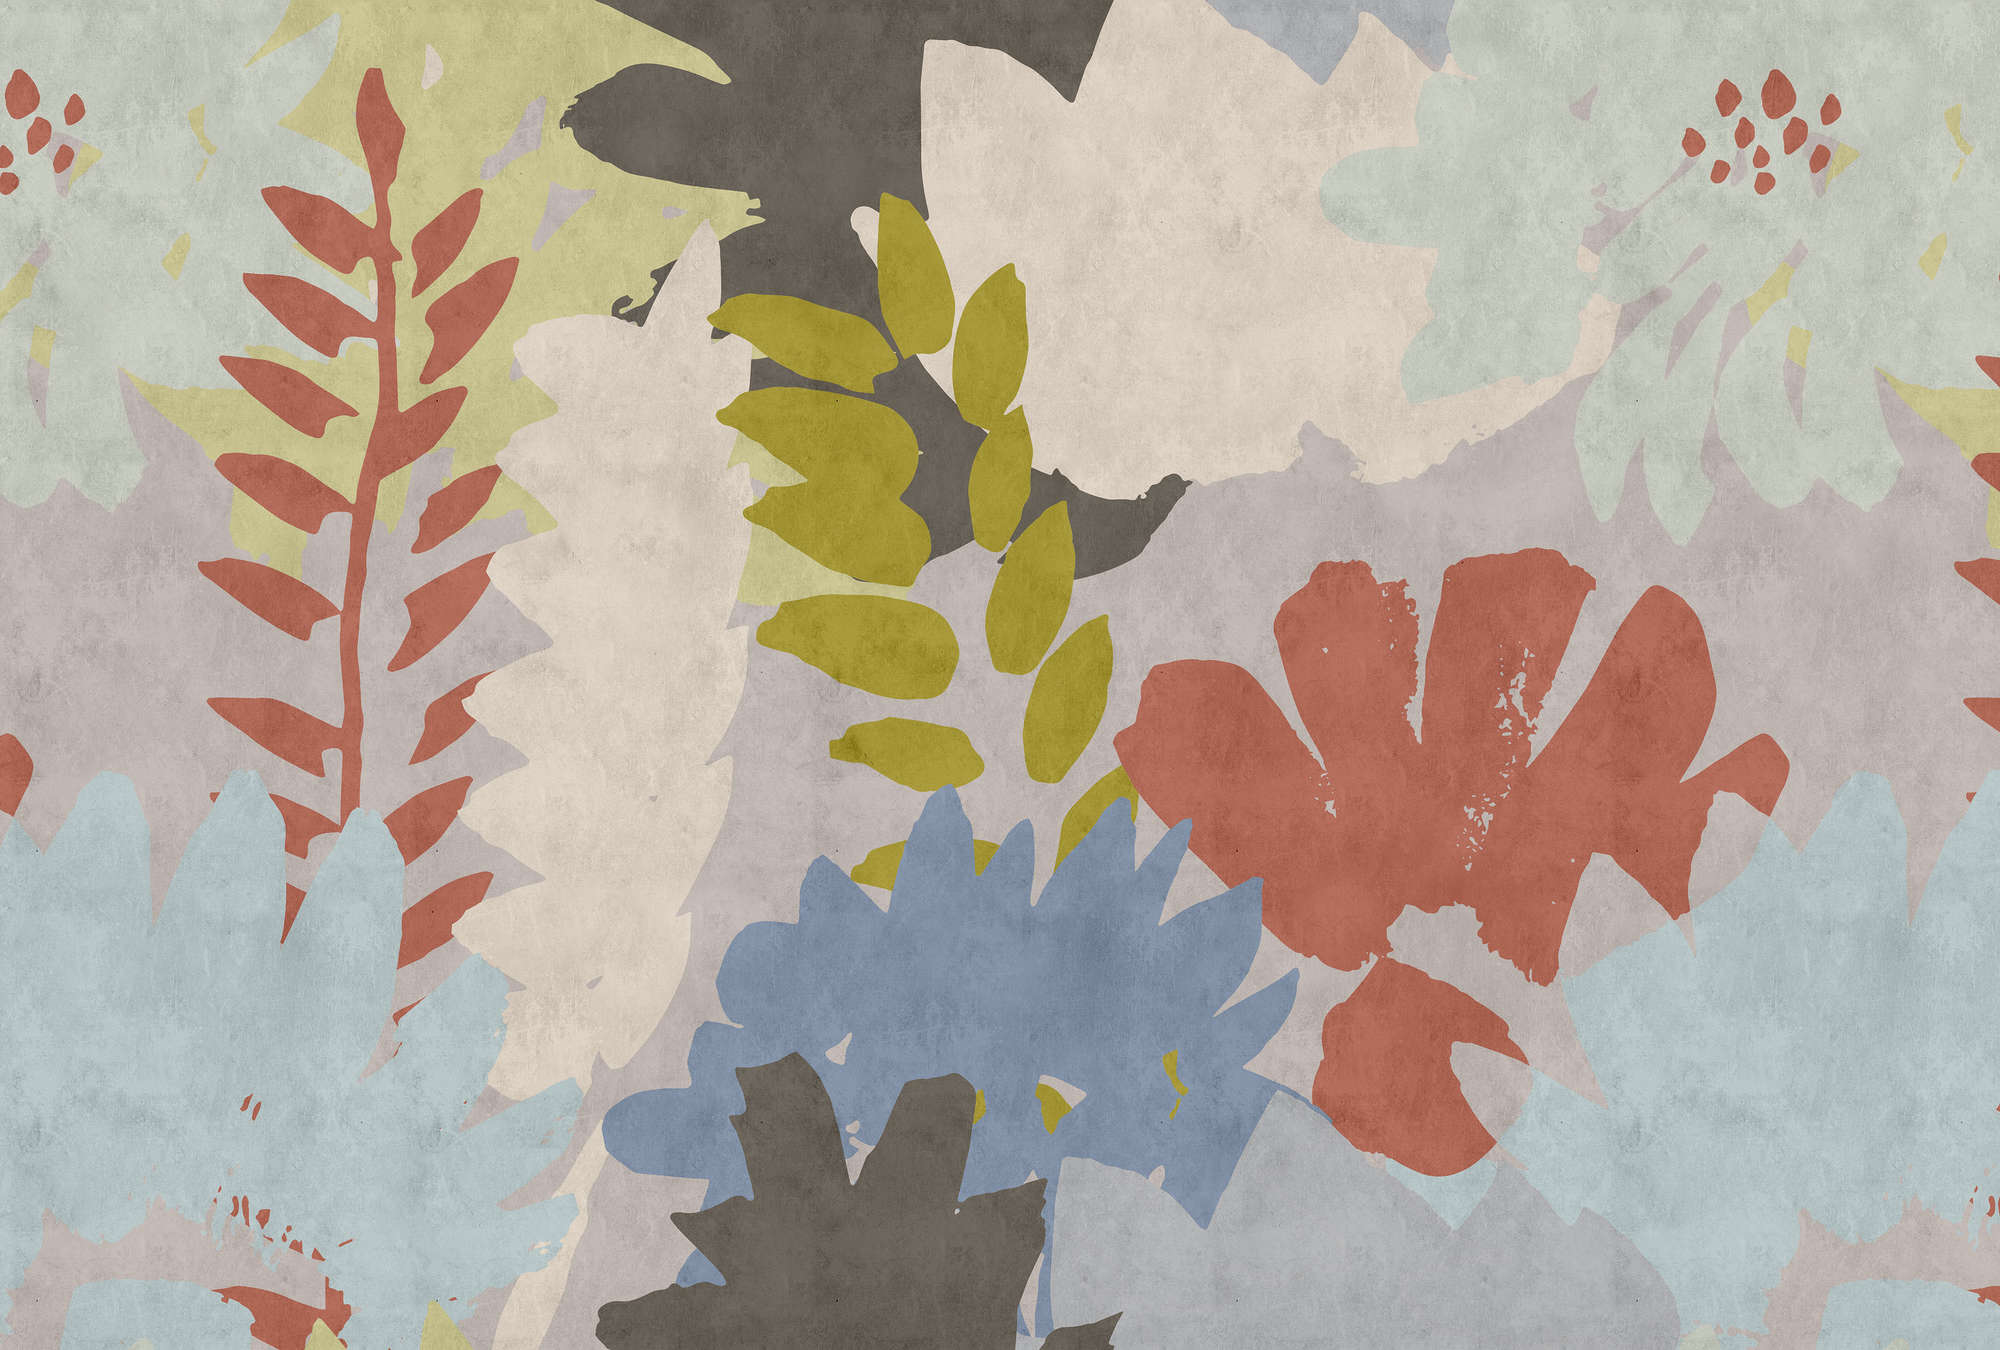             Floral Collage 3 - Abstract behang in vloeipapierstructuur met bladmotief - Blauw, Crème | Structure Non-woven
        